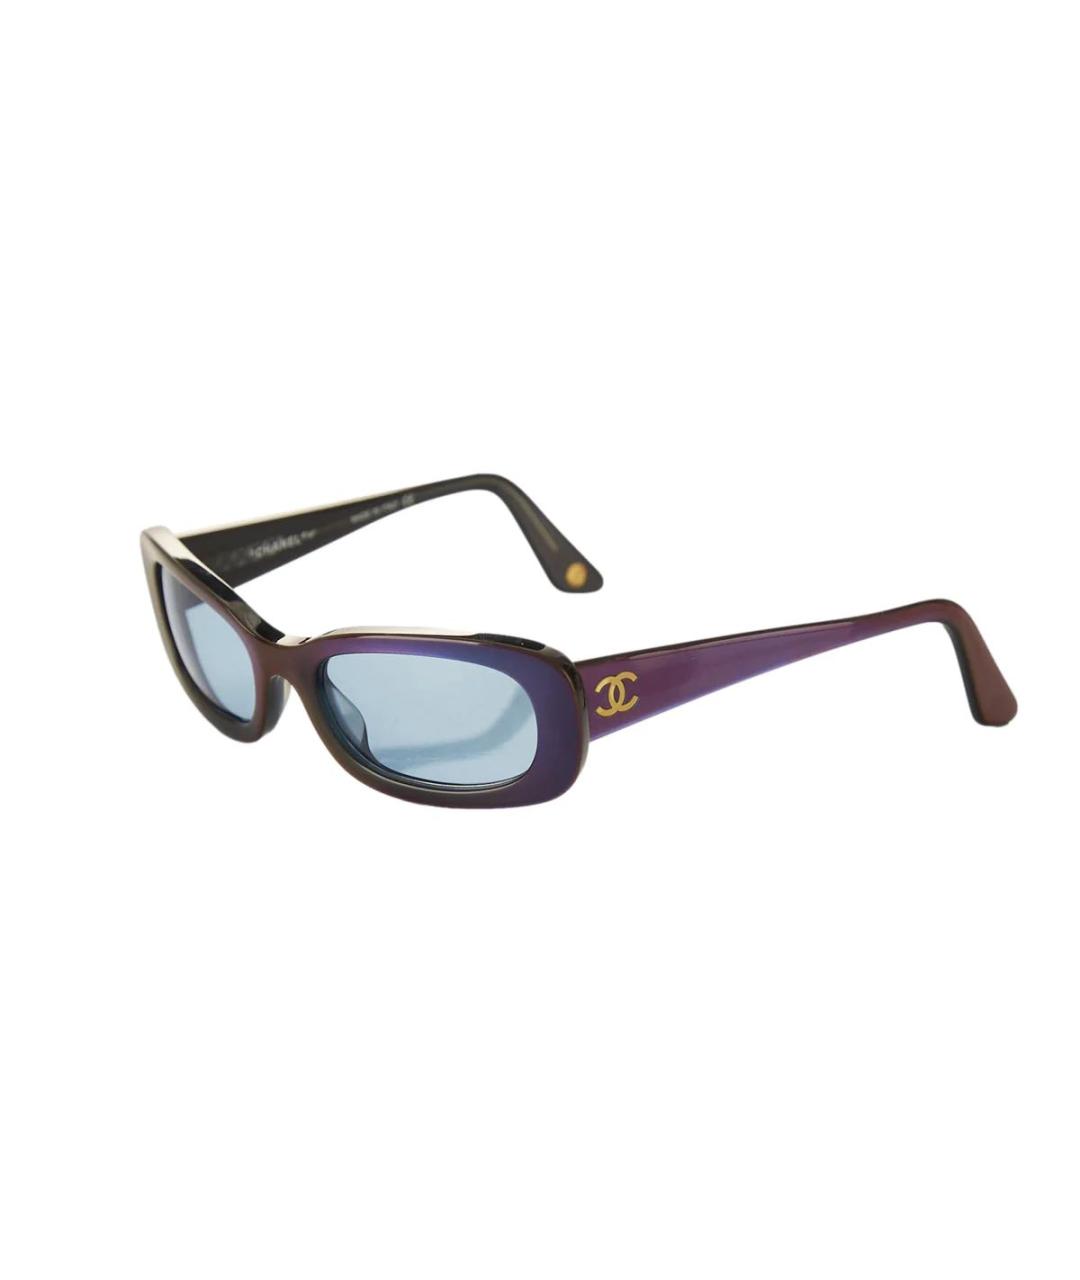 CHANEL PRE-OWNED Темно-синие пластиковые солнцезащитные очки, фото 1